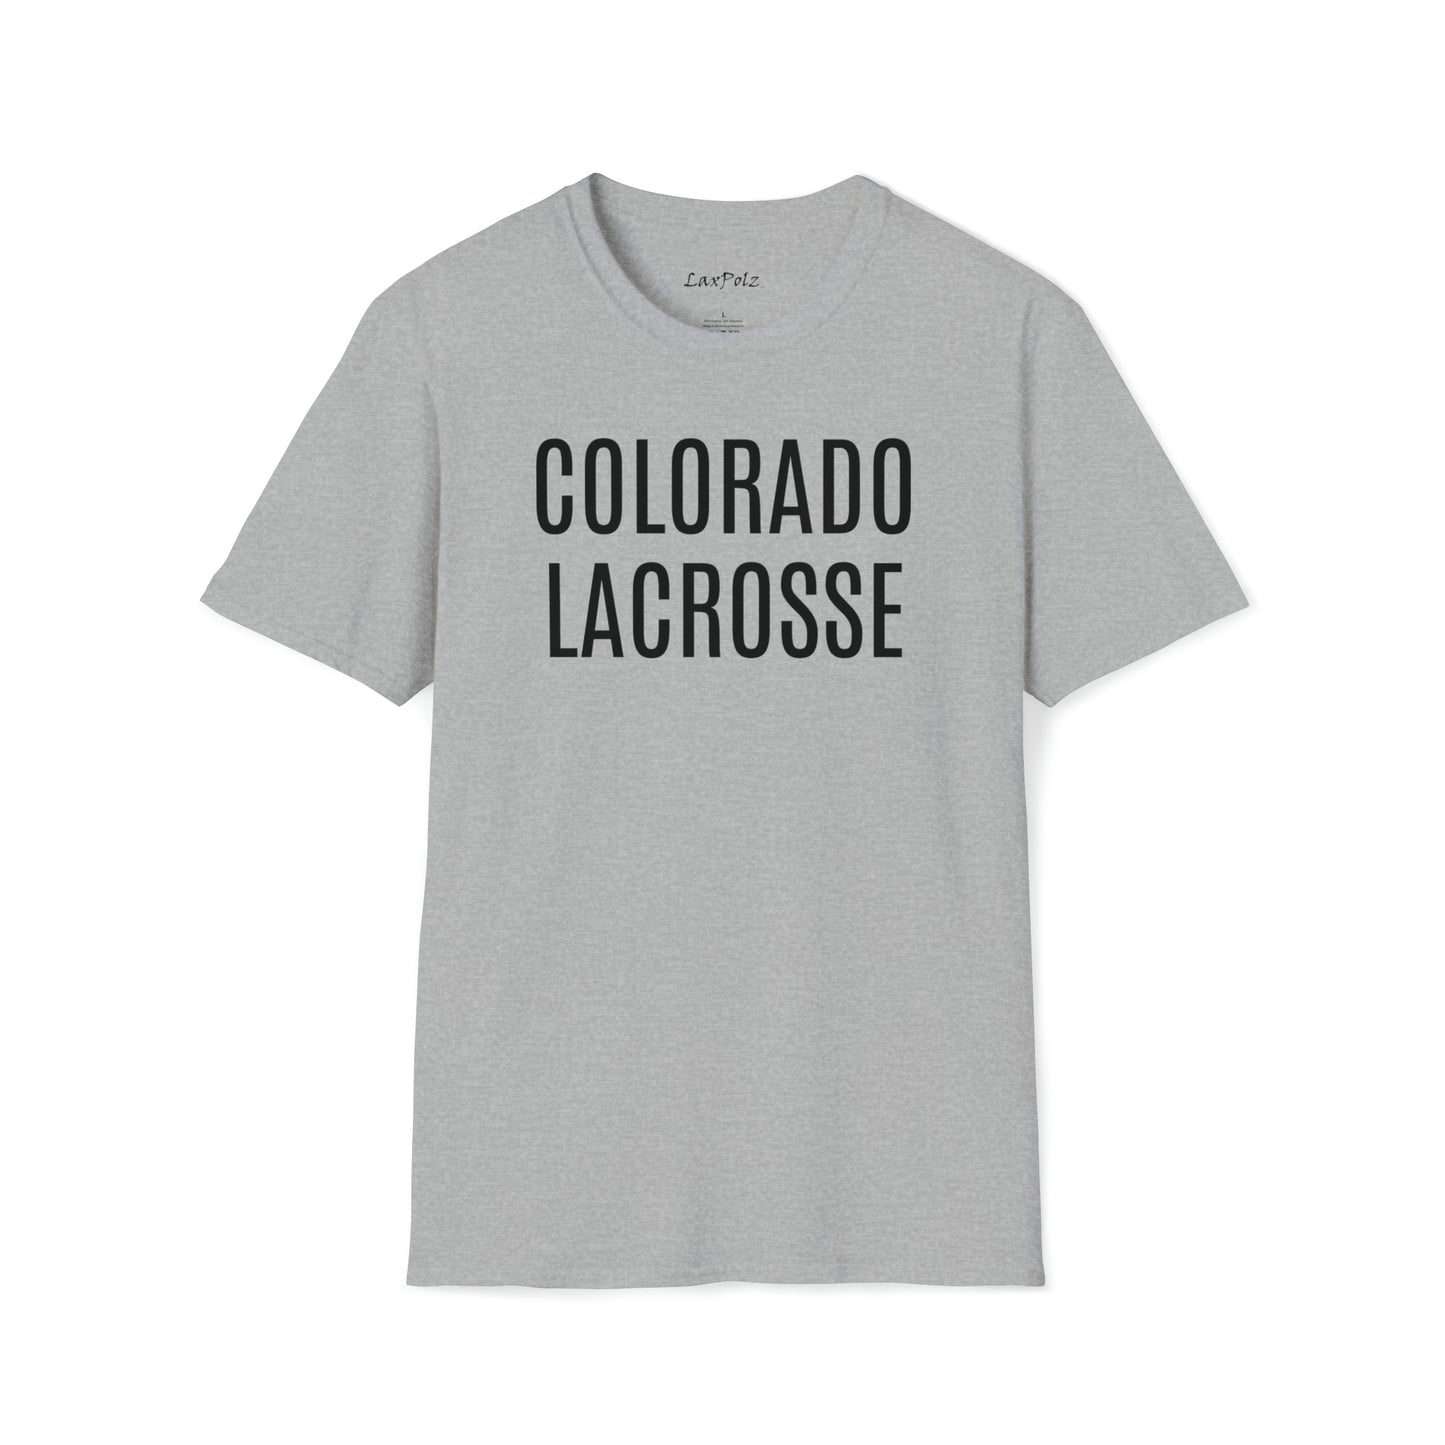 Colorado Lacrosse Softstyle Tee